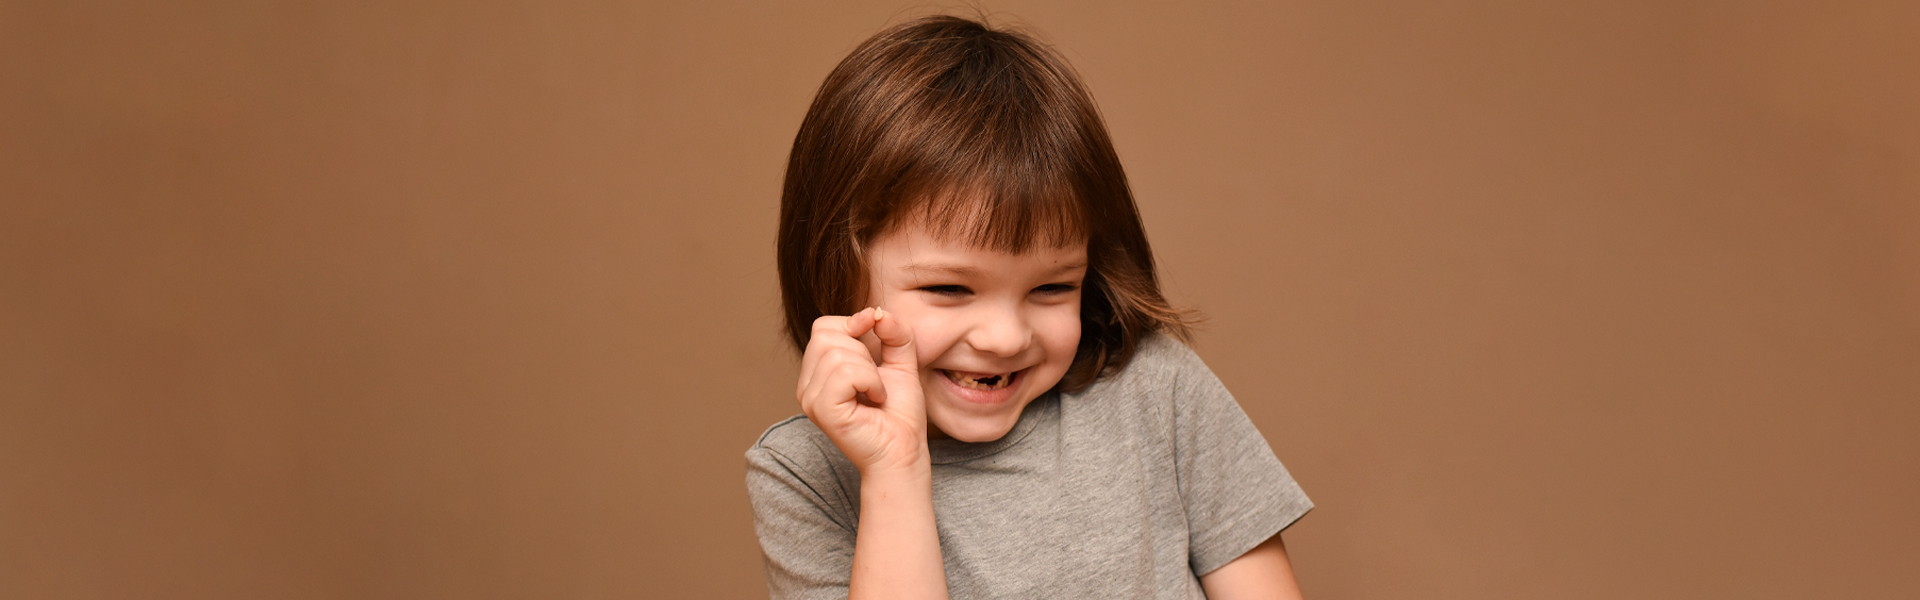 Porcelain Bridges Help Replace Missing Permanent Teeth in Children